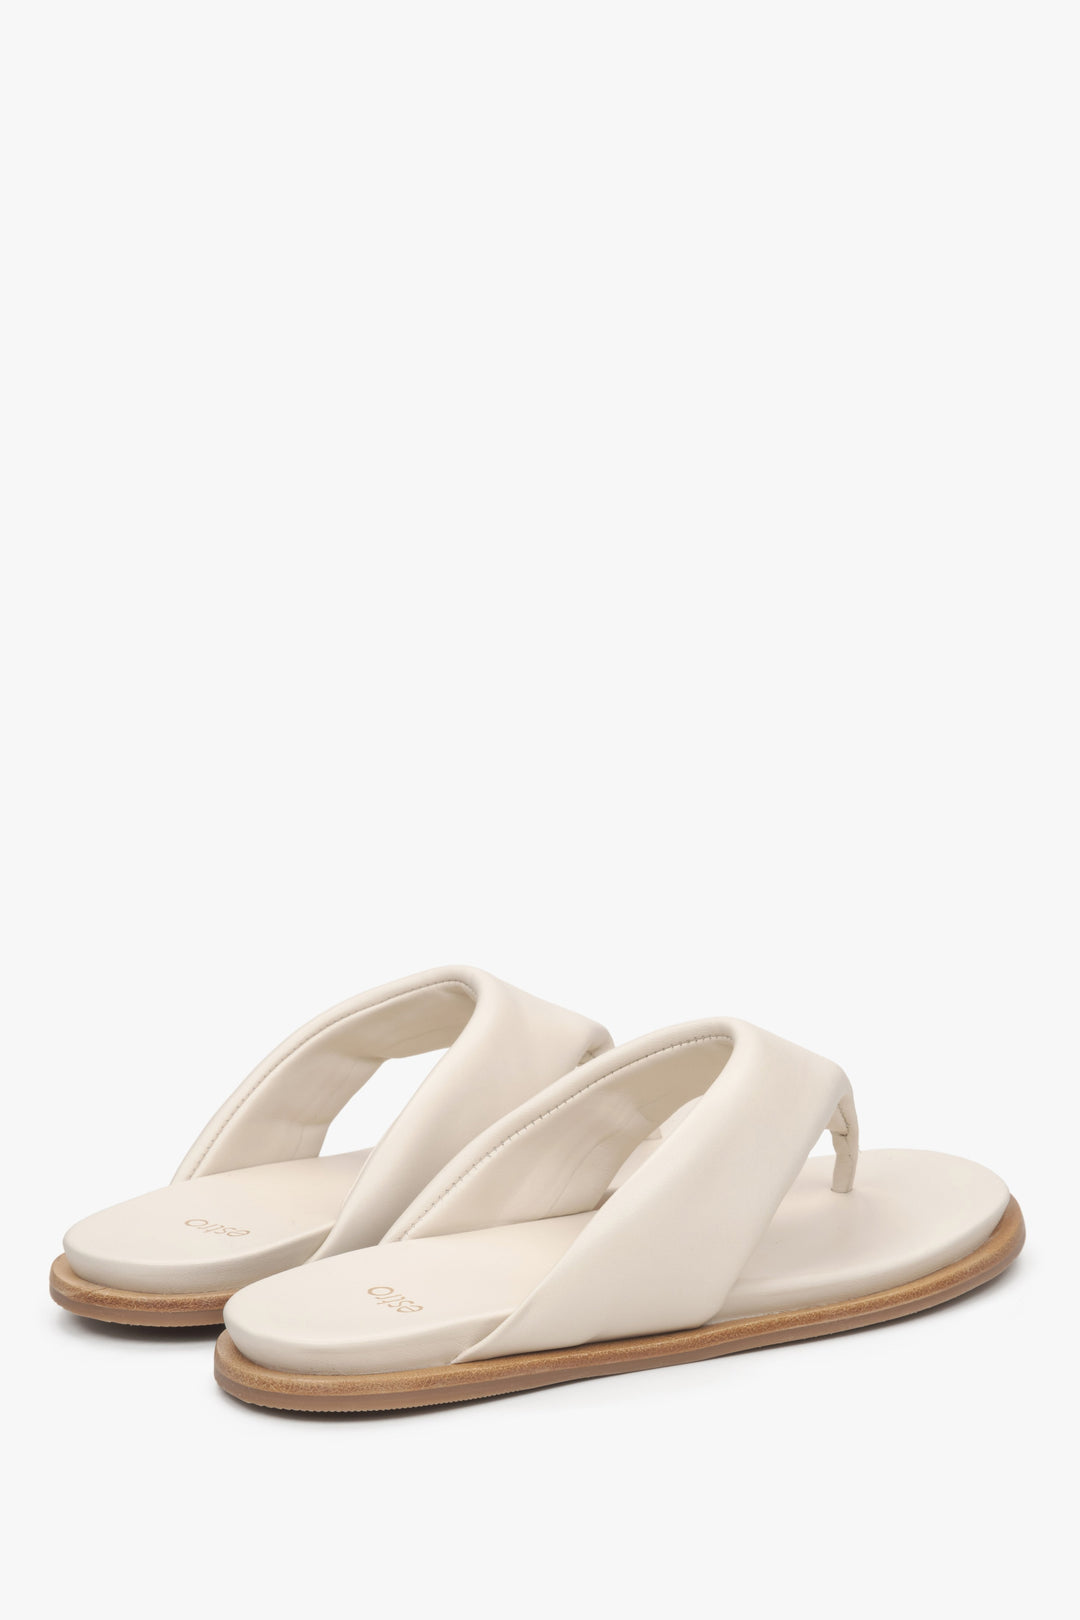 Women's light beige leather slide sandals Estro.